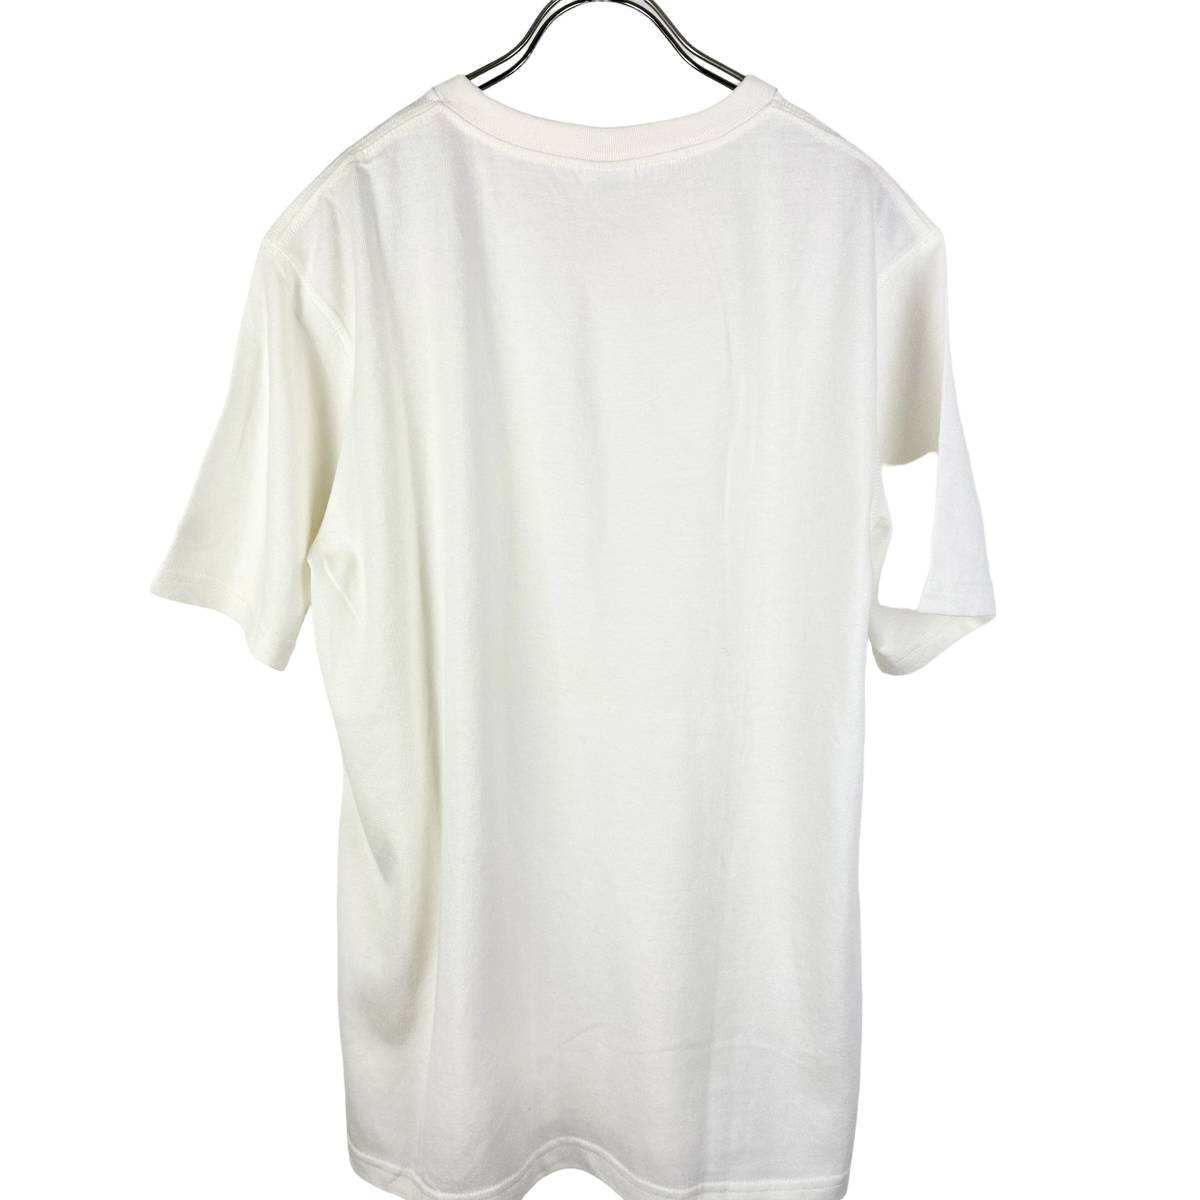 Champion(チャンピオン) Athletic Apparel V Neck T Shirt (white)